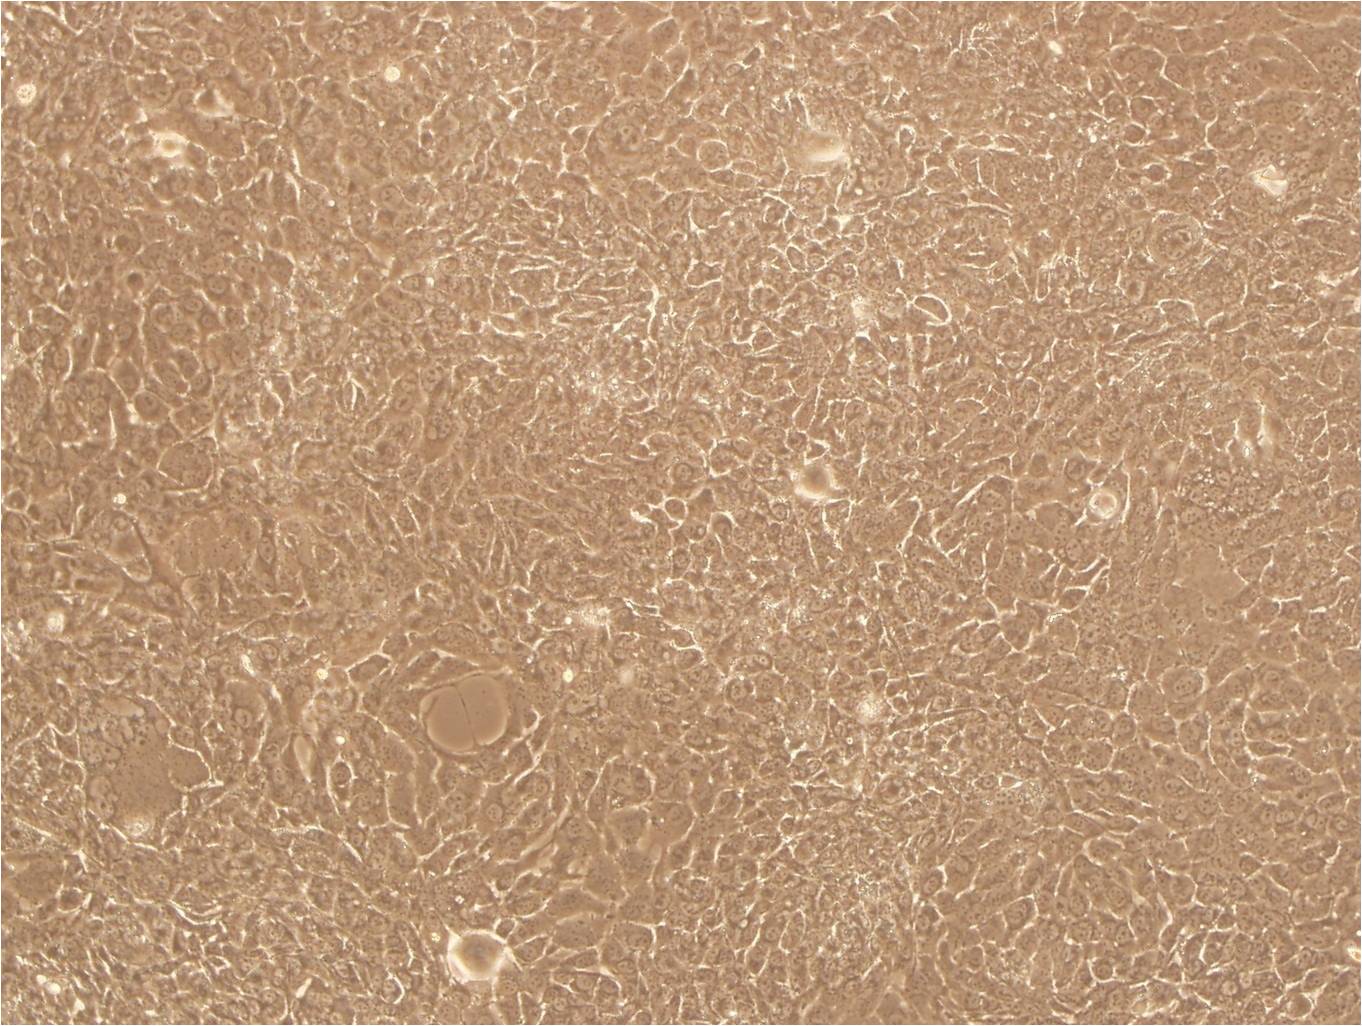 FRhK-4 Cells|恒河猴胚肾可传代细胞系